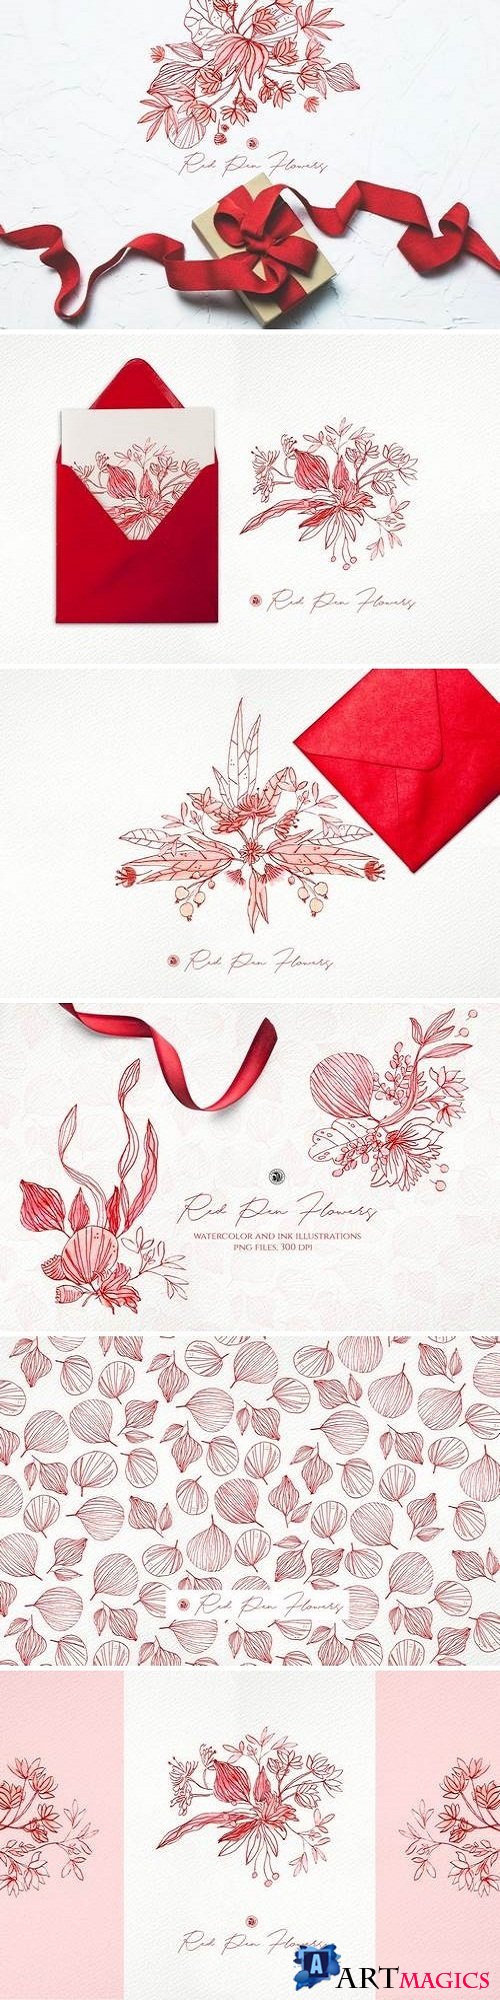 Red Pen Flowers - 3405822